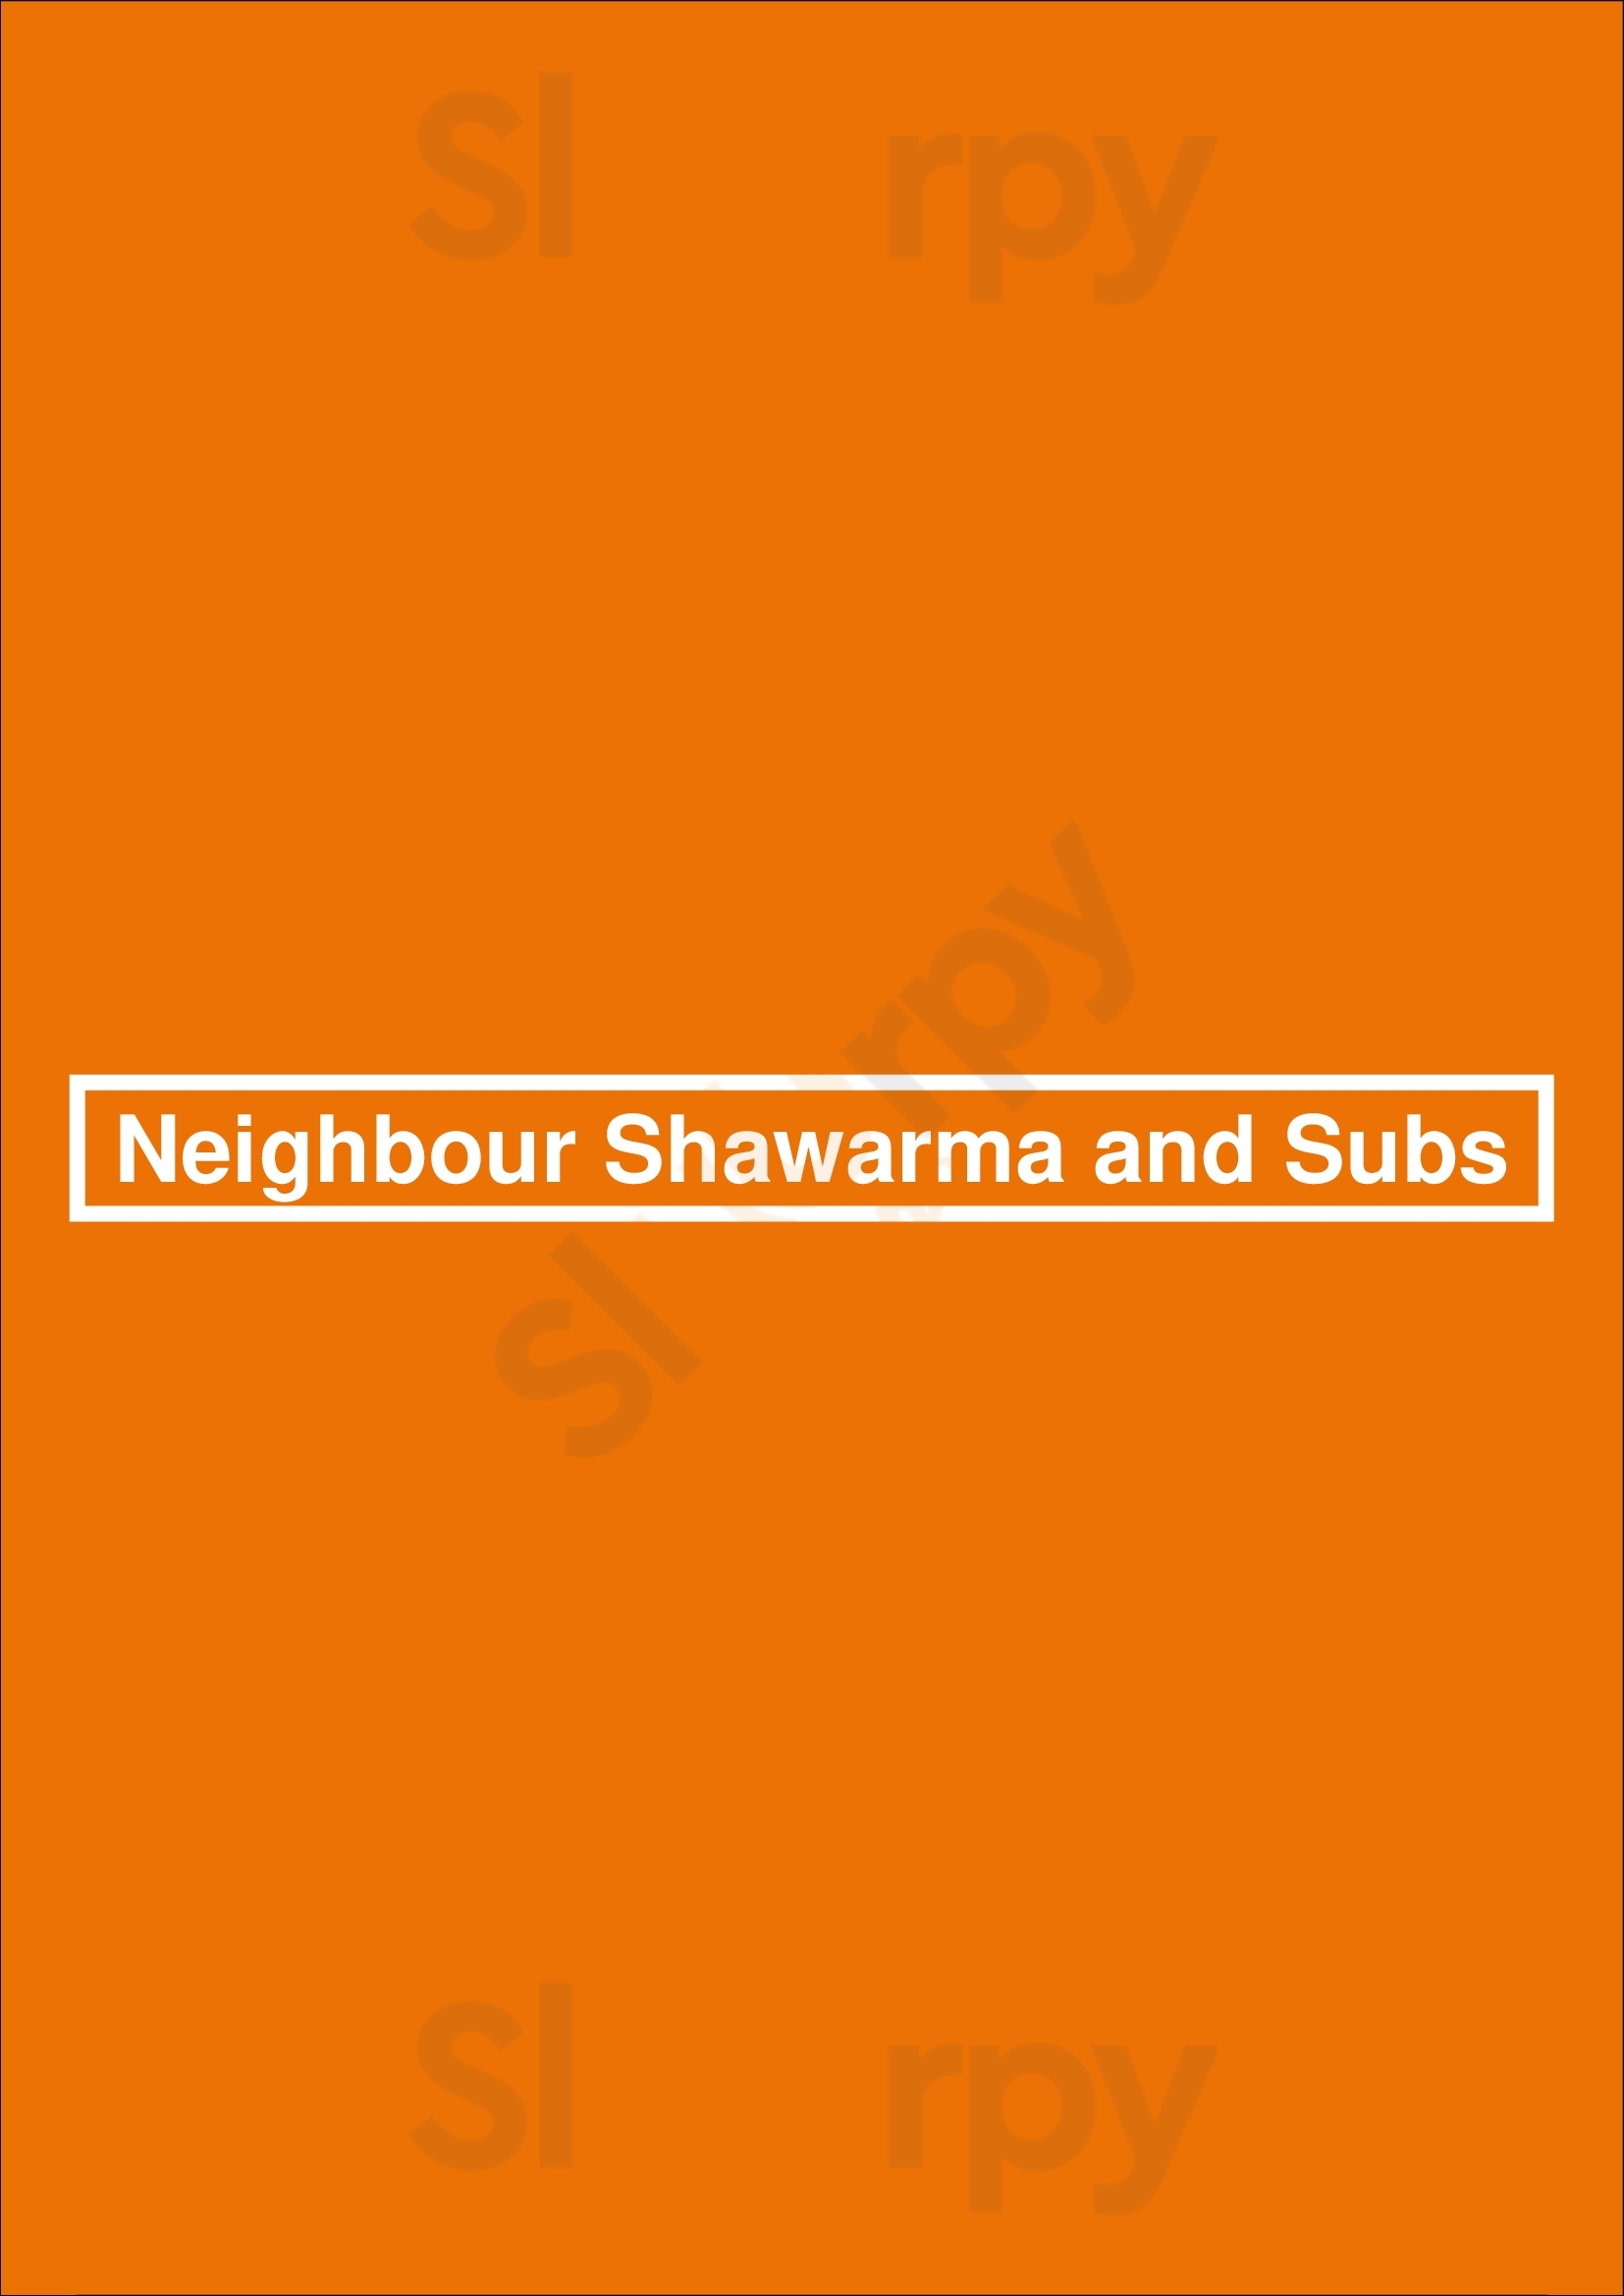 Neighbour Shawarma And Subs Hamilton Menu - 1